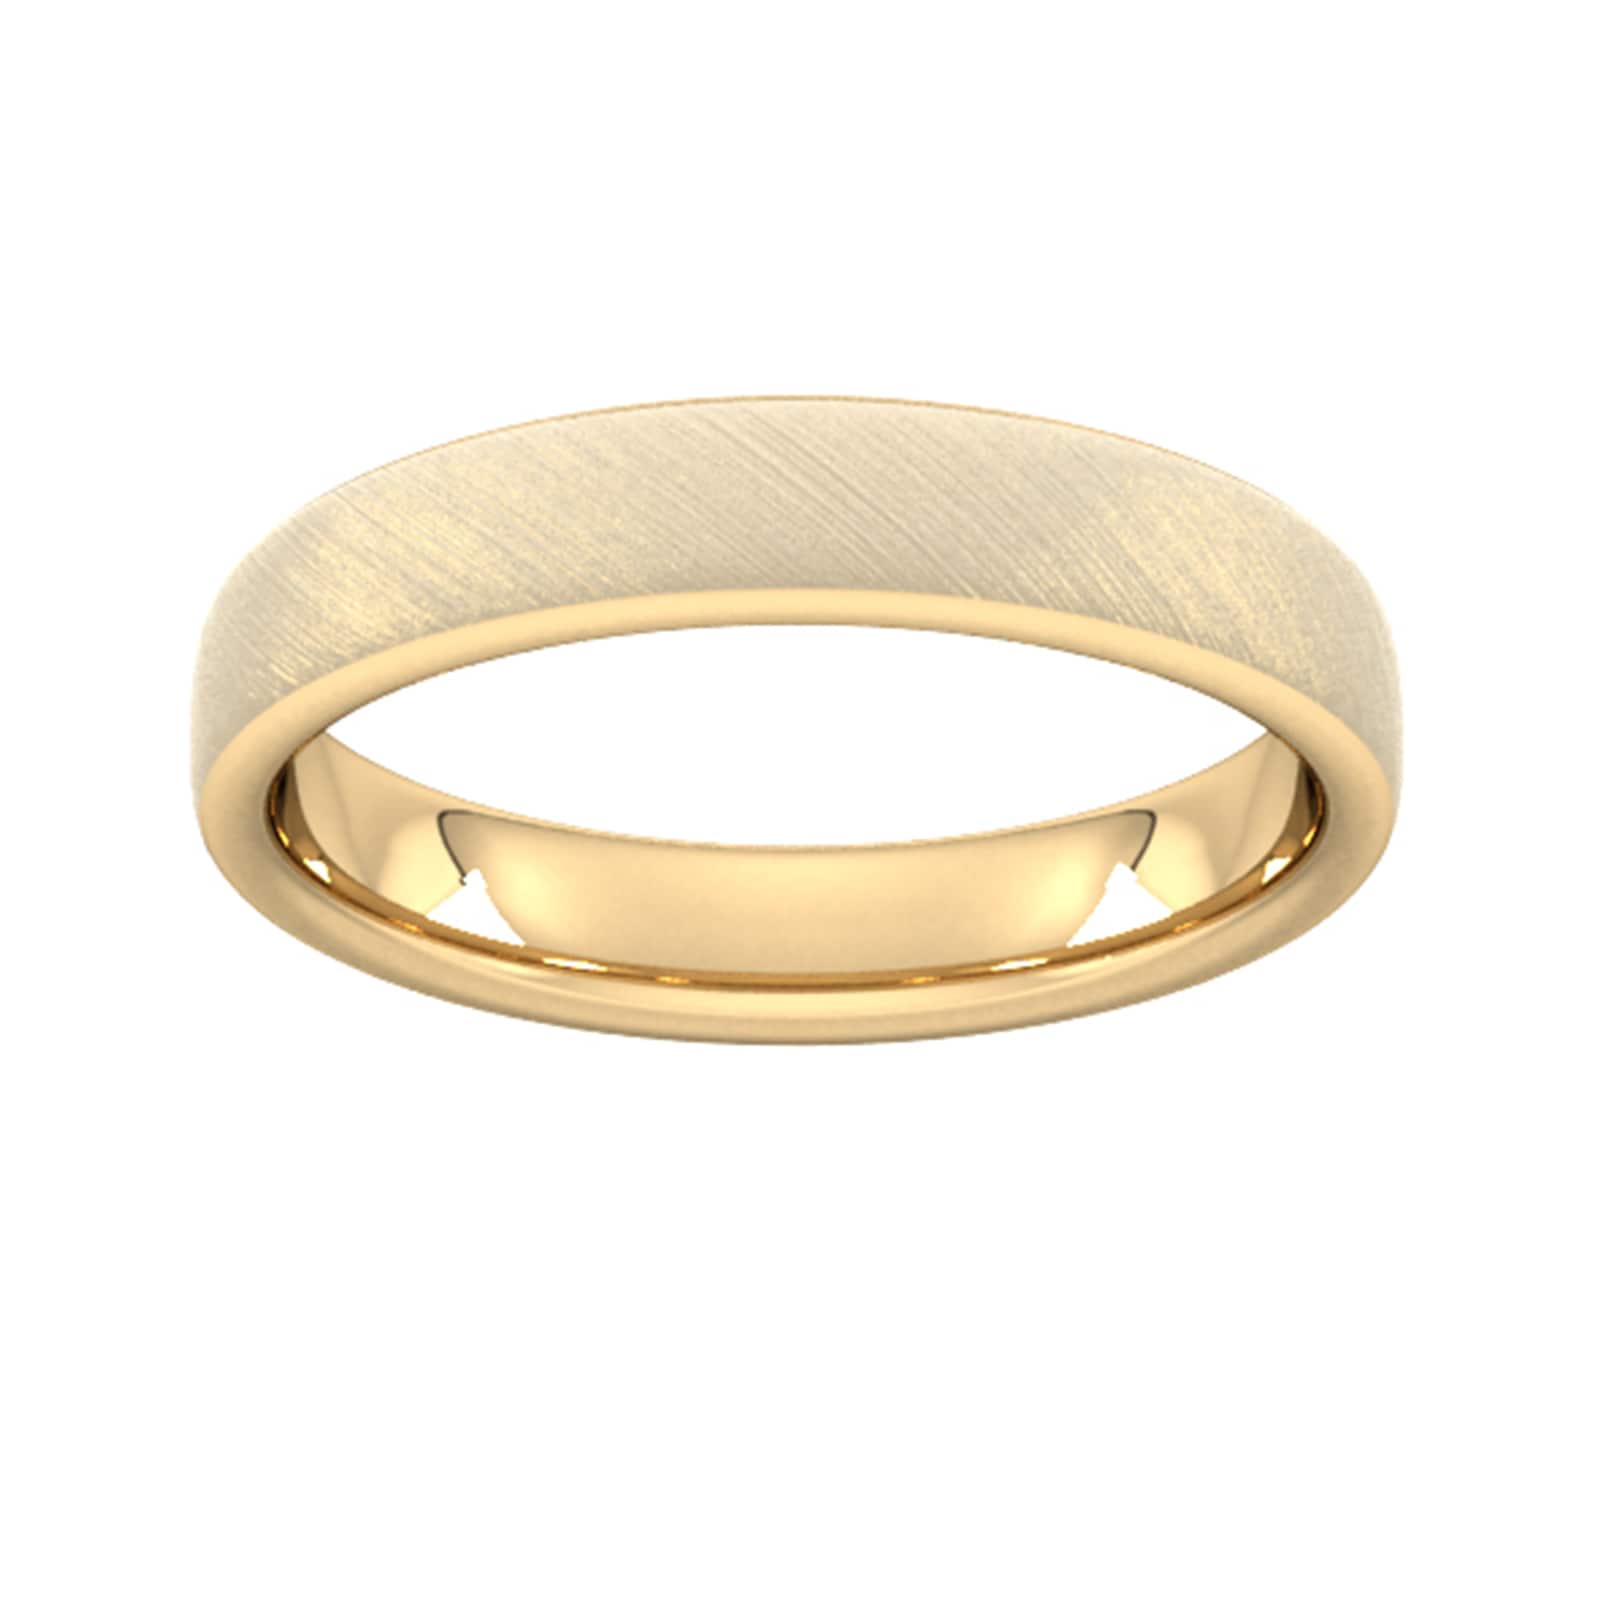 4mm Traditional Court Standard Diagonal Matt Finish Wedding Ring In 9 Carat Yellow Gold - Ring Size Q